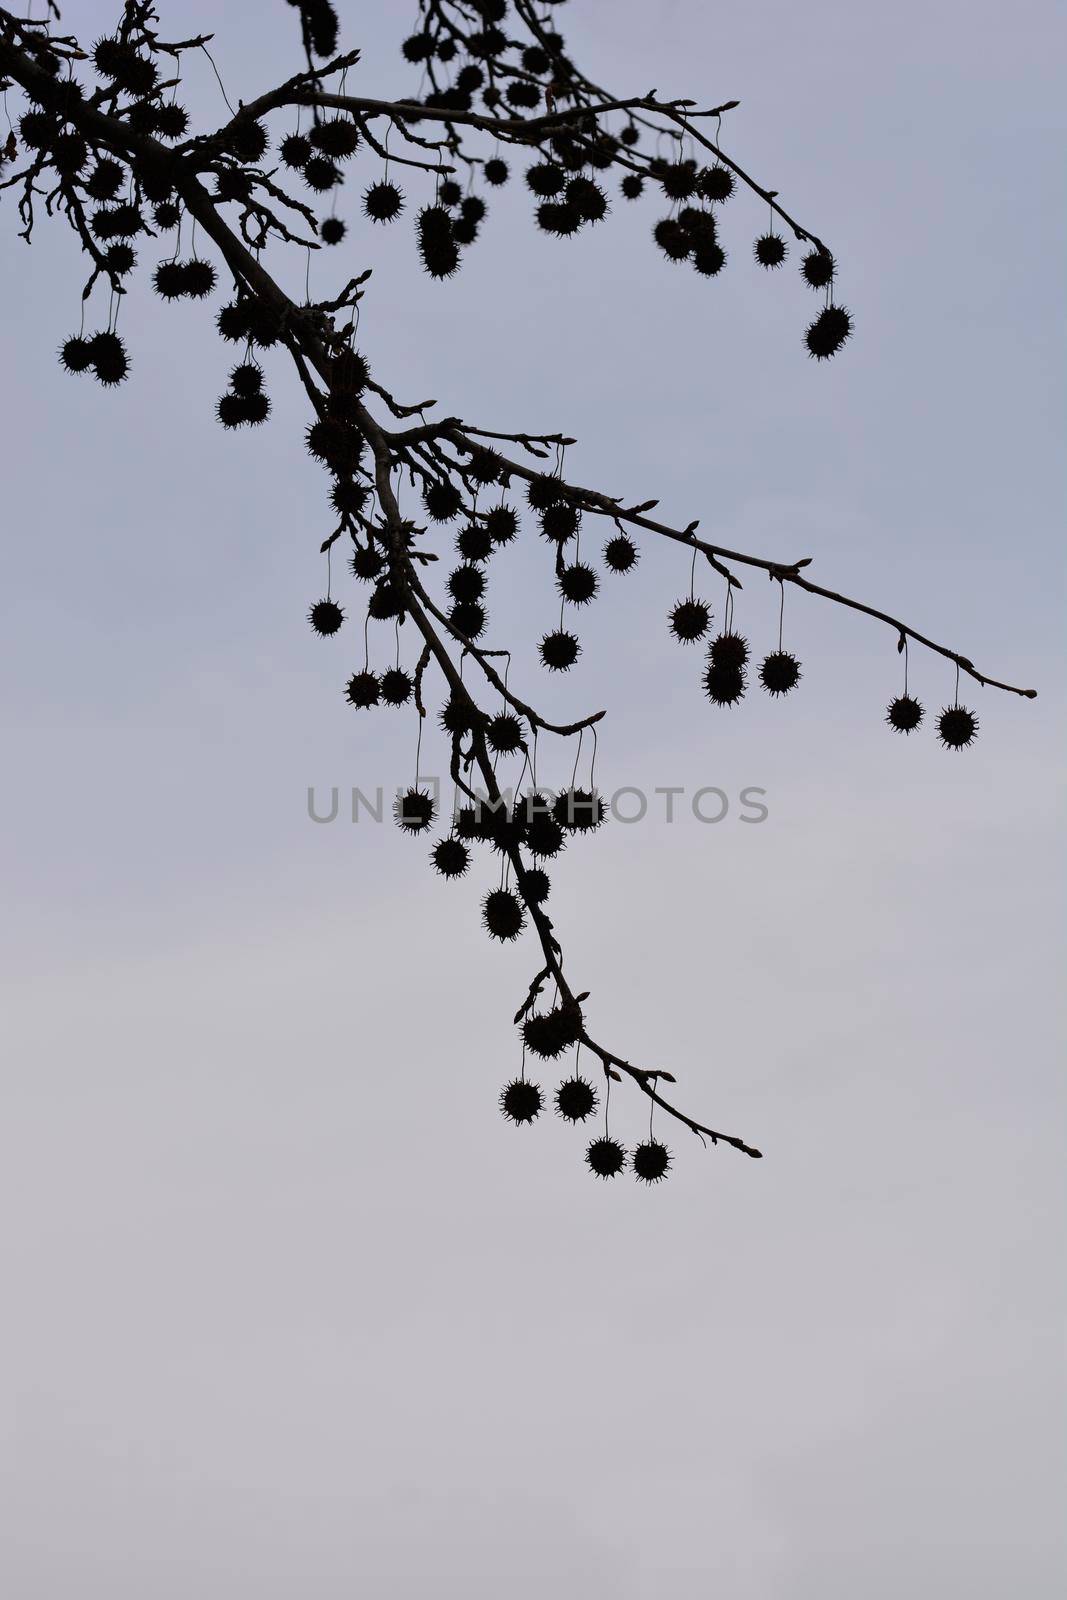 American sweetgum seeds on branches silhouette against gray sky - Latin name - Liquidambar styraciflua